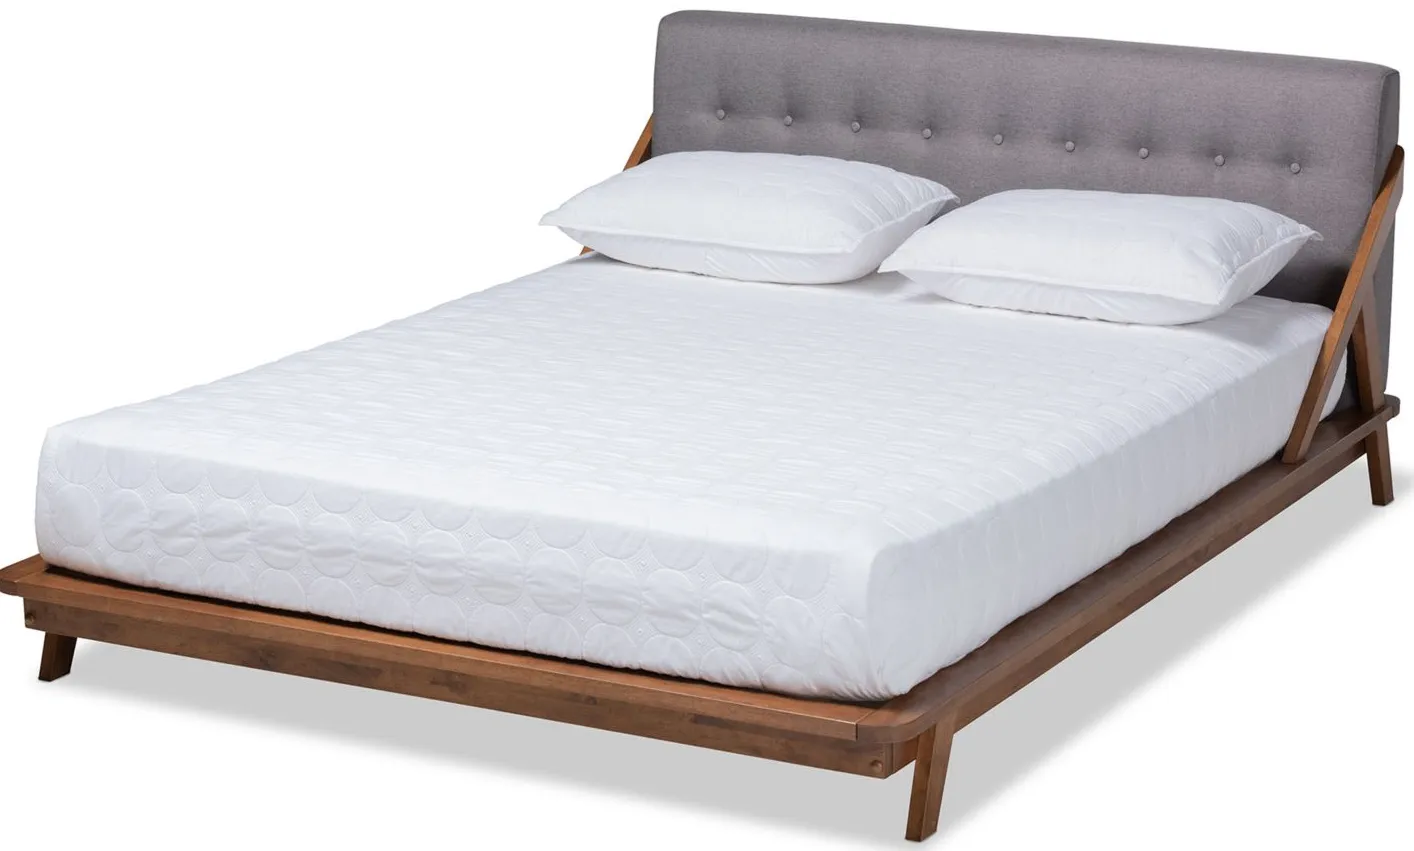 Sante Mid-Century Queen Size Platform Bed in Grey/Walnut Brown by Wholesale Interiors